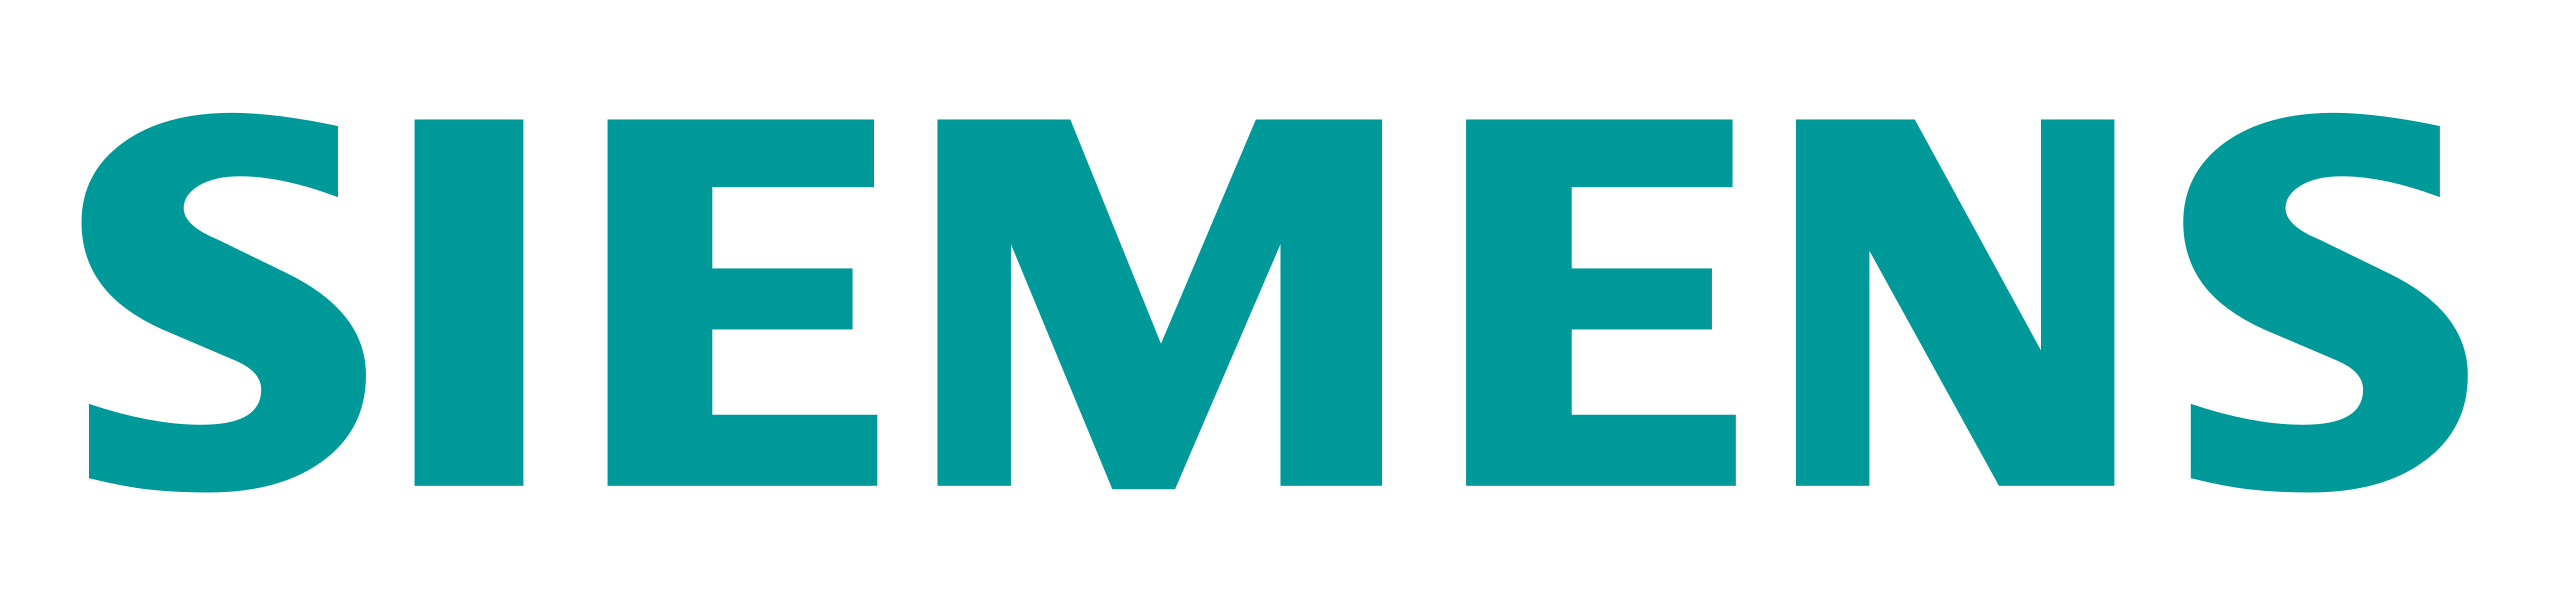 西门子logo.png